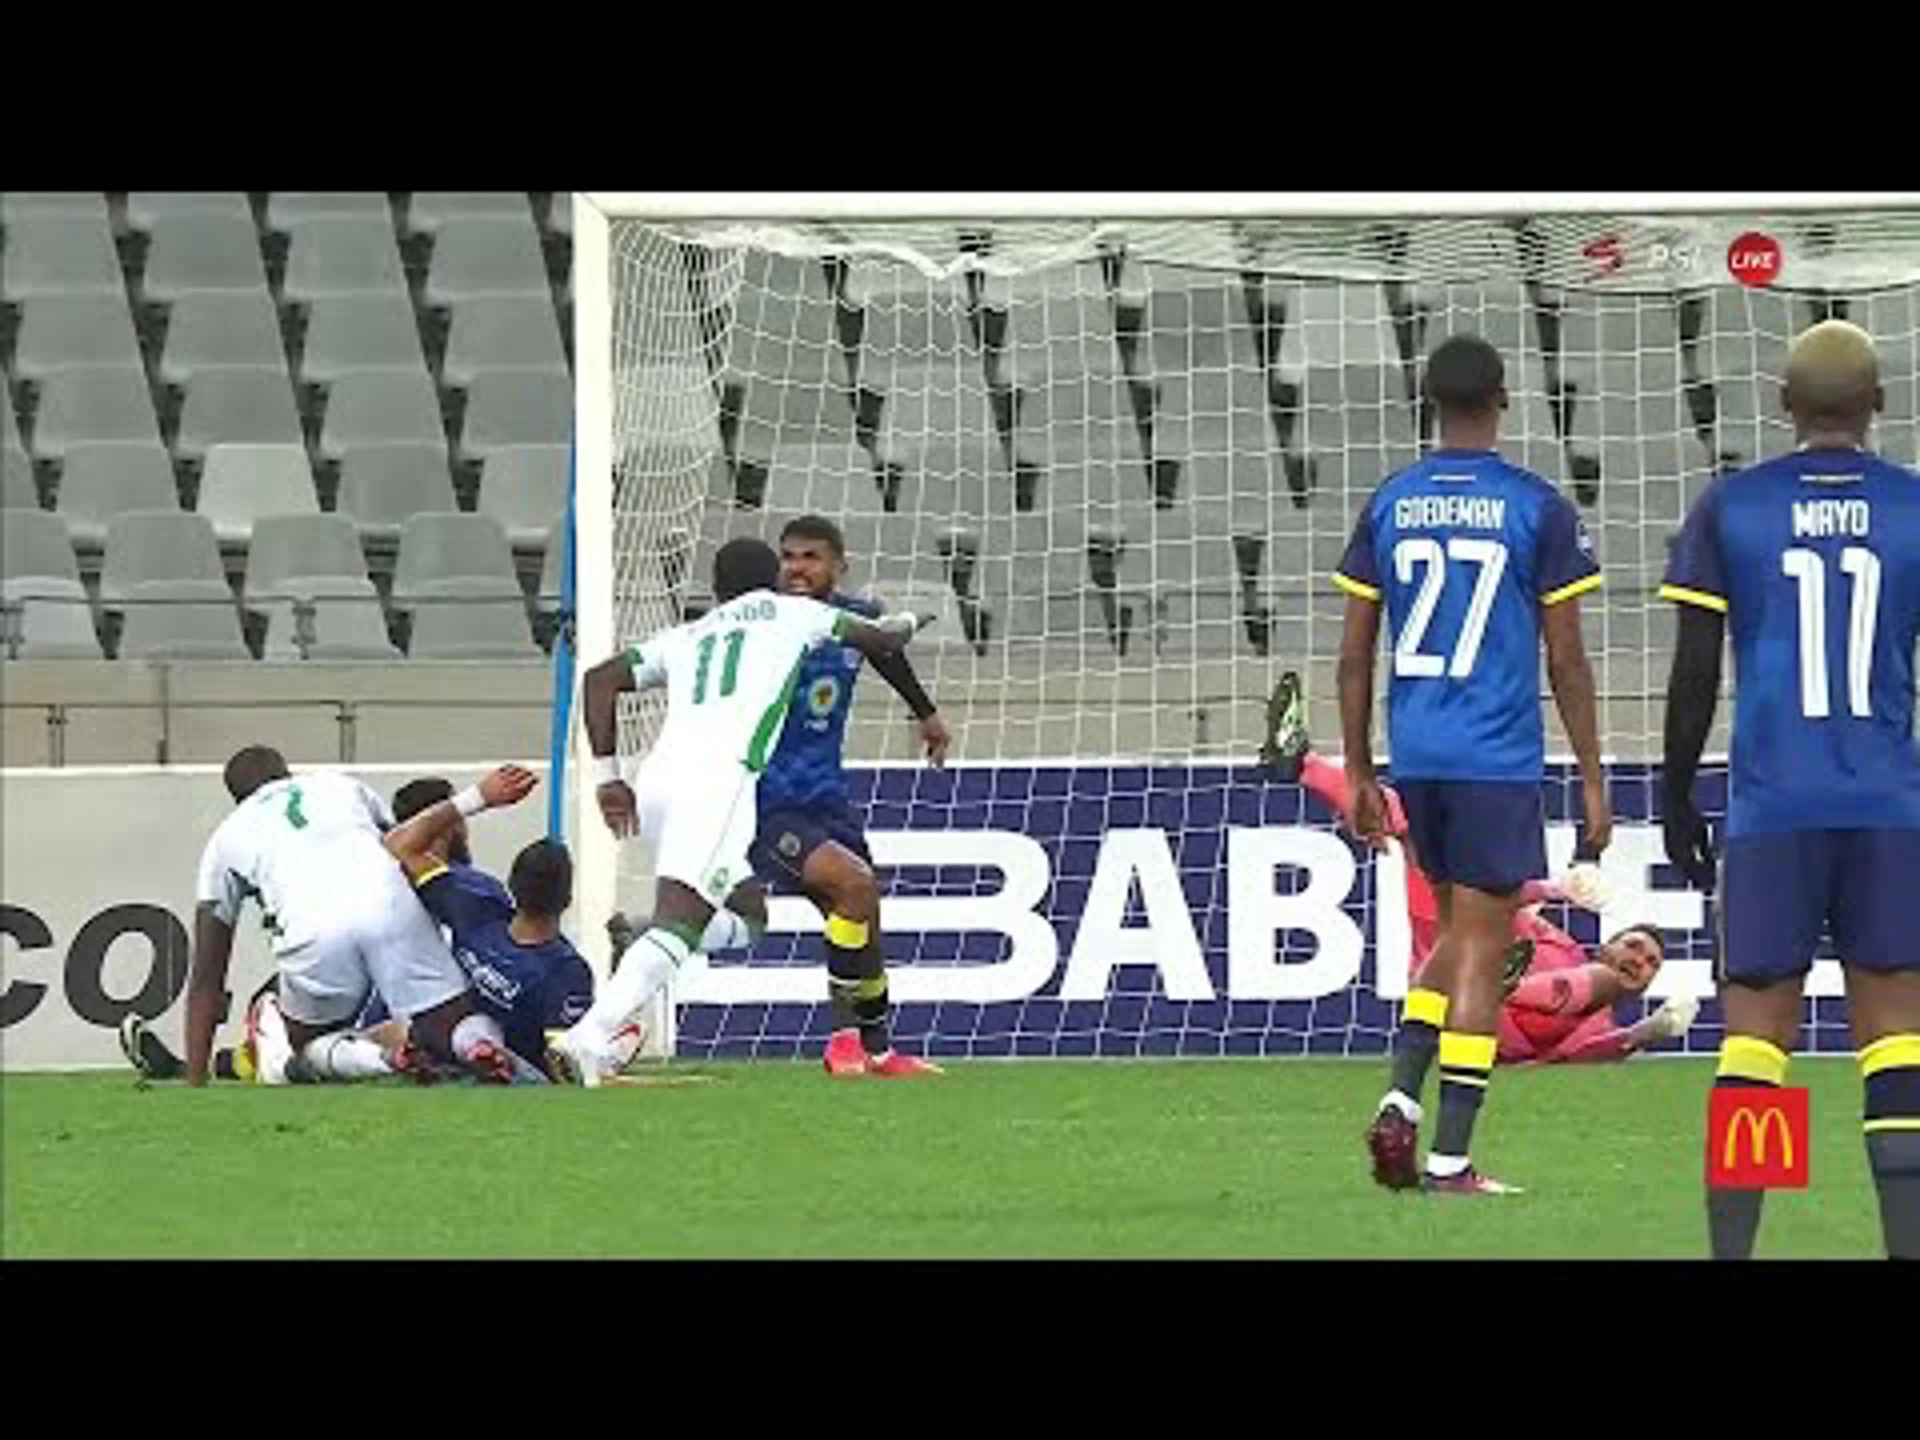 DStv Premiership | Cape Town City vs AmaZulu | Third Goal